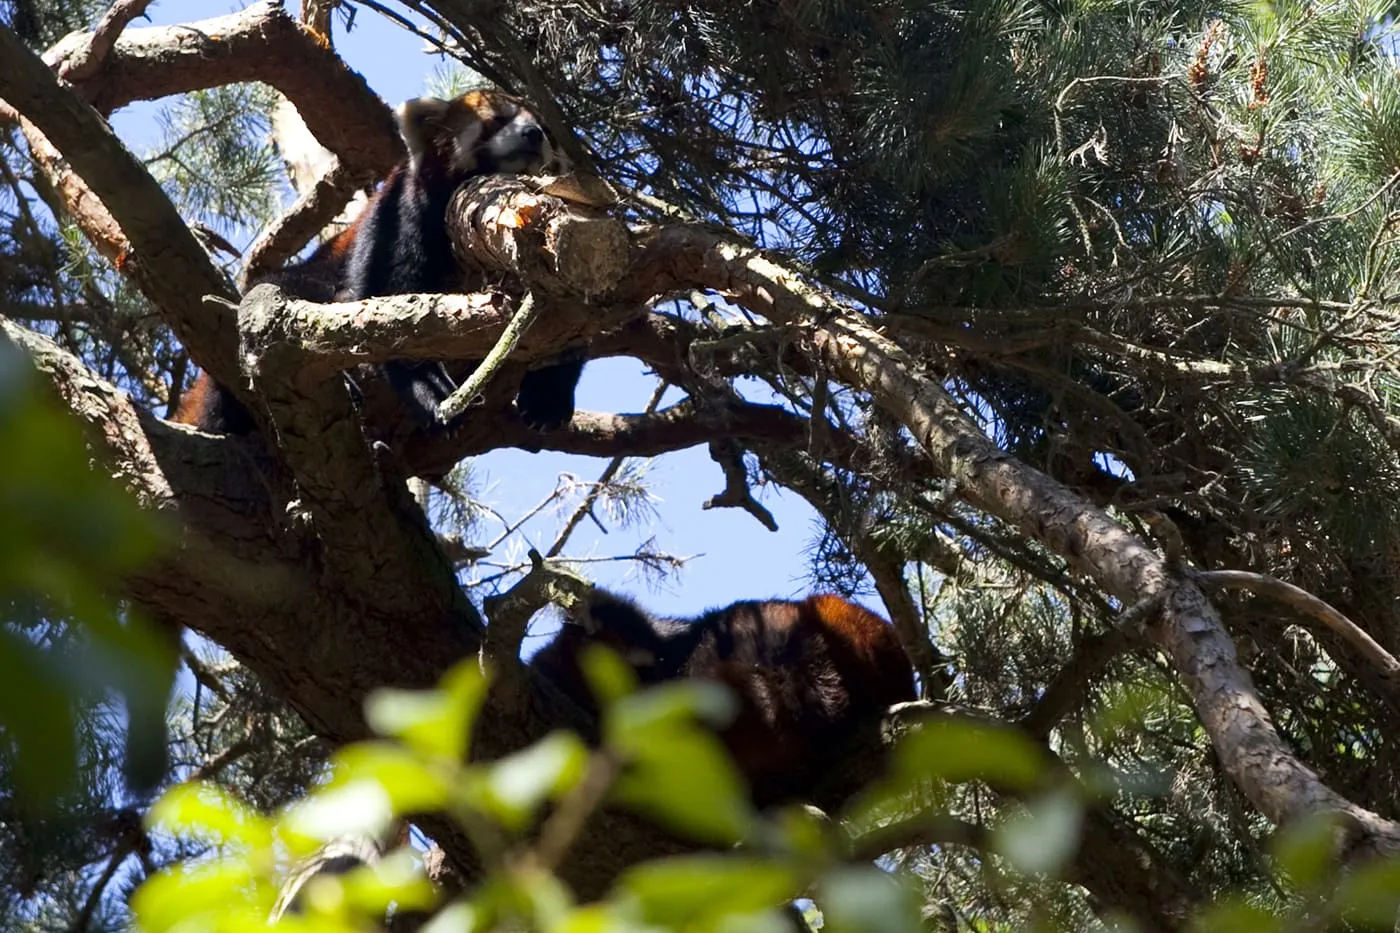 Red Pandas at Woodland Park Zoo in Seattle, Washington.